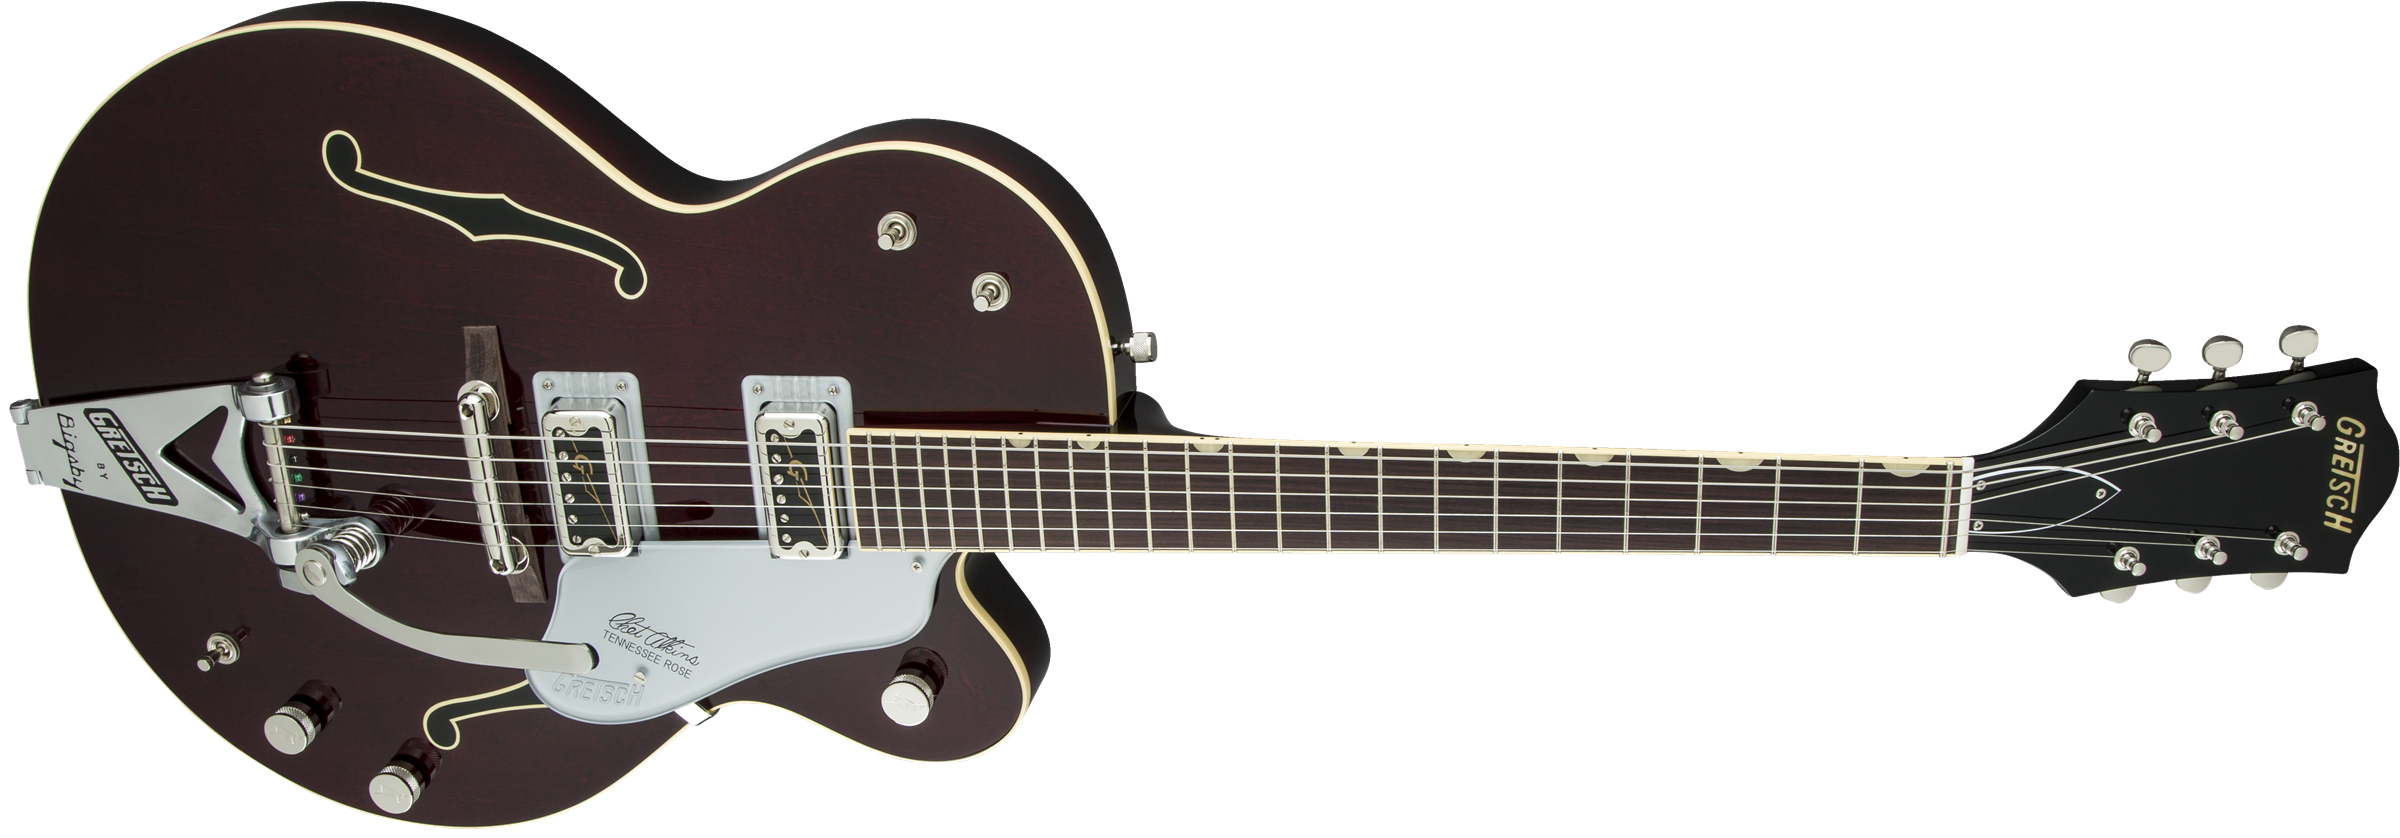 Gretsch G6119t-62vs Chet Atkins Tennessee Rose 2h Trem Rw - Dark Cherry Stain - Semi-hollow electric guitar - Variation 2